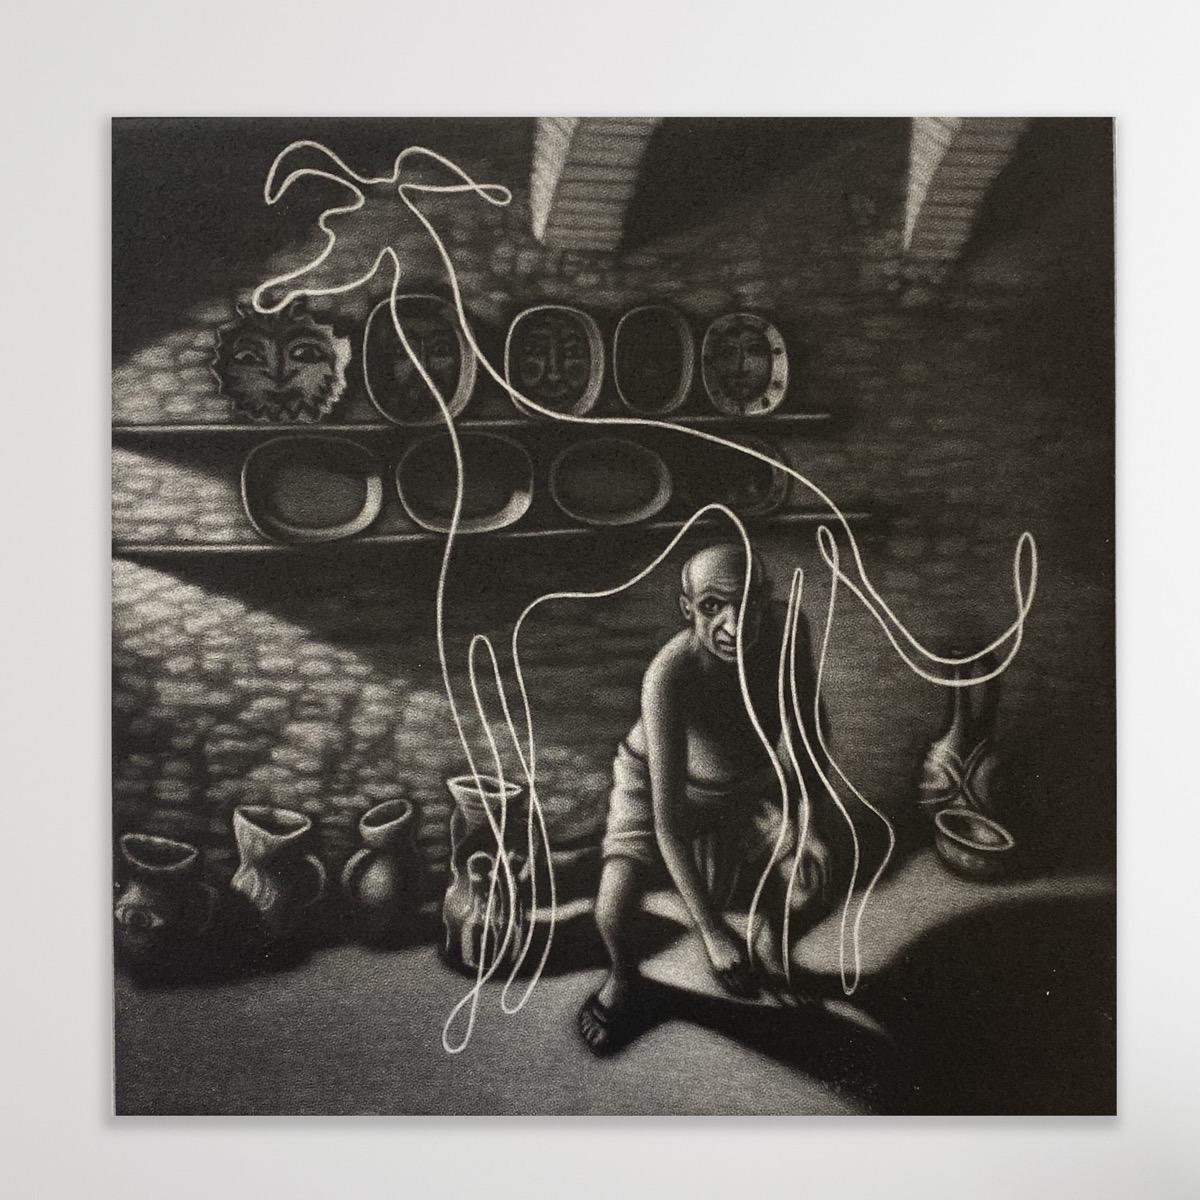 Picasso’s Dog, Art print, Landscape, Figurative  - Print by Mychael Barratt